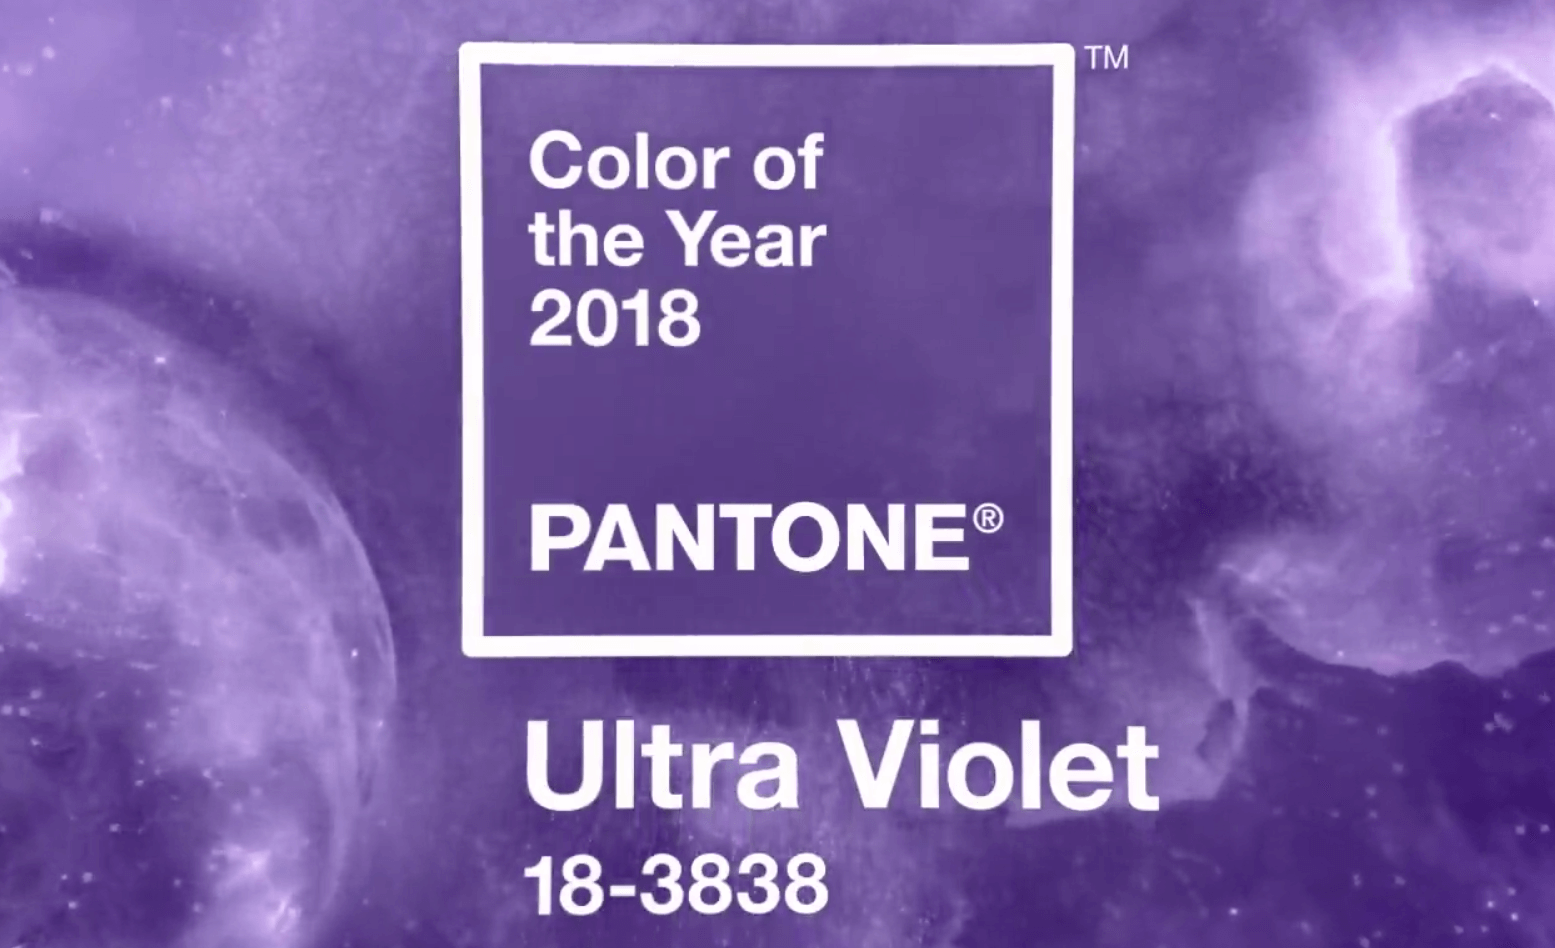 The Ultra Violet color.